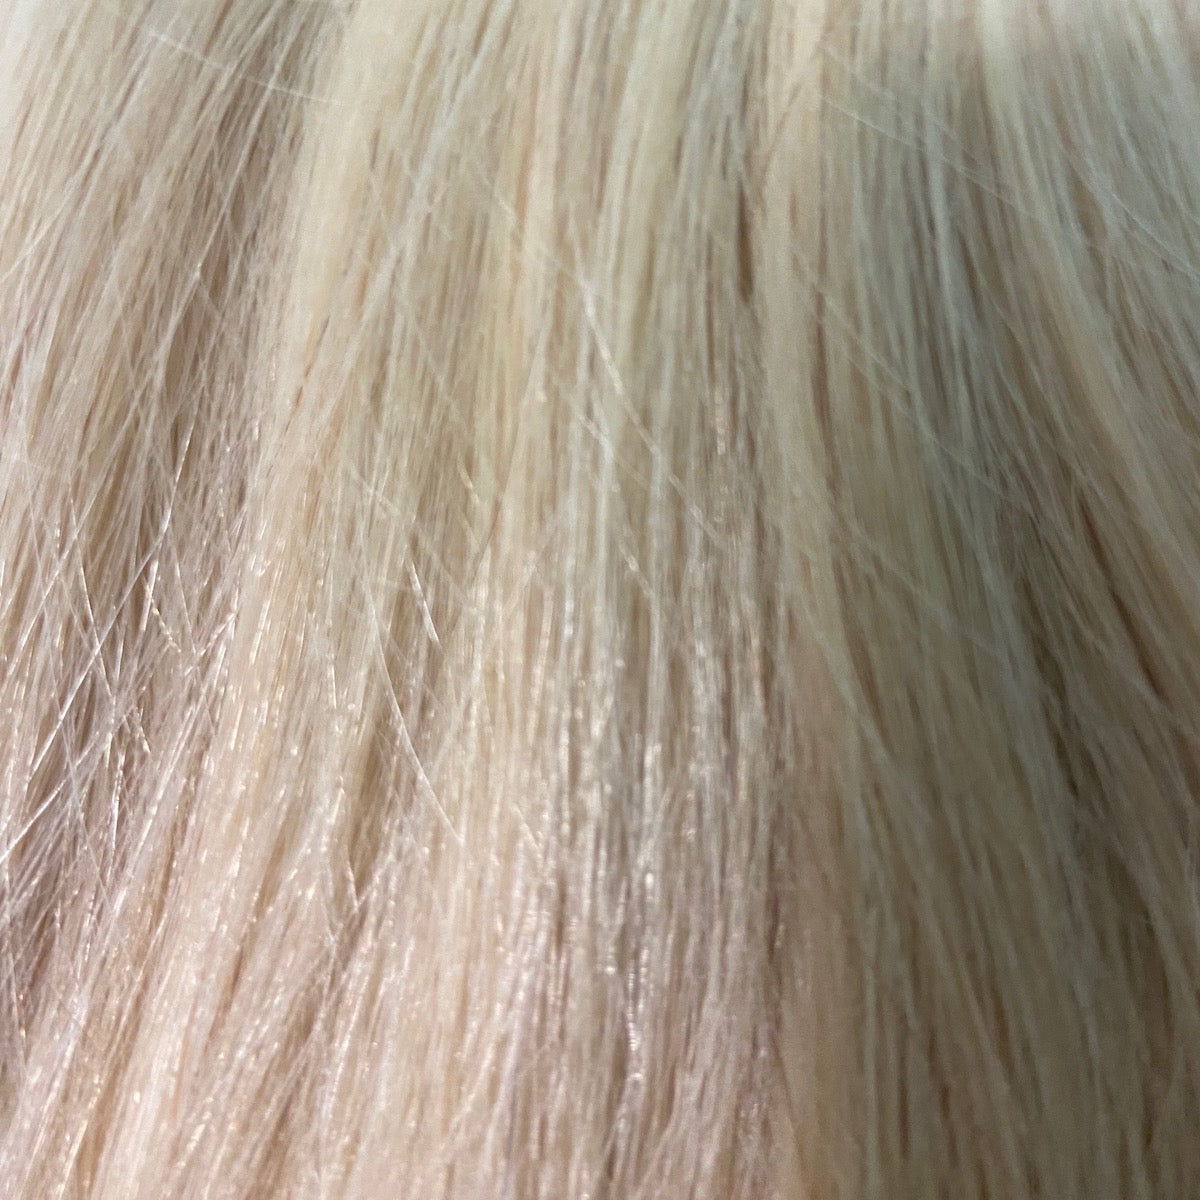 Tape-In 24" 55g Professional Hair Extensions - #19 Desert Blonde